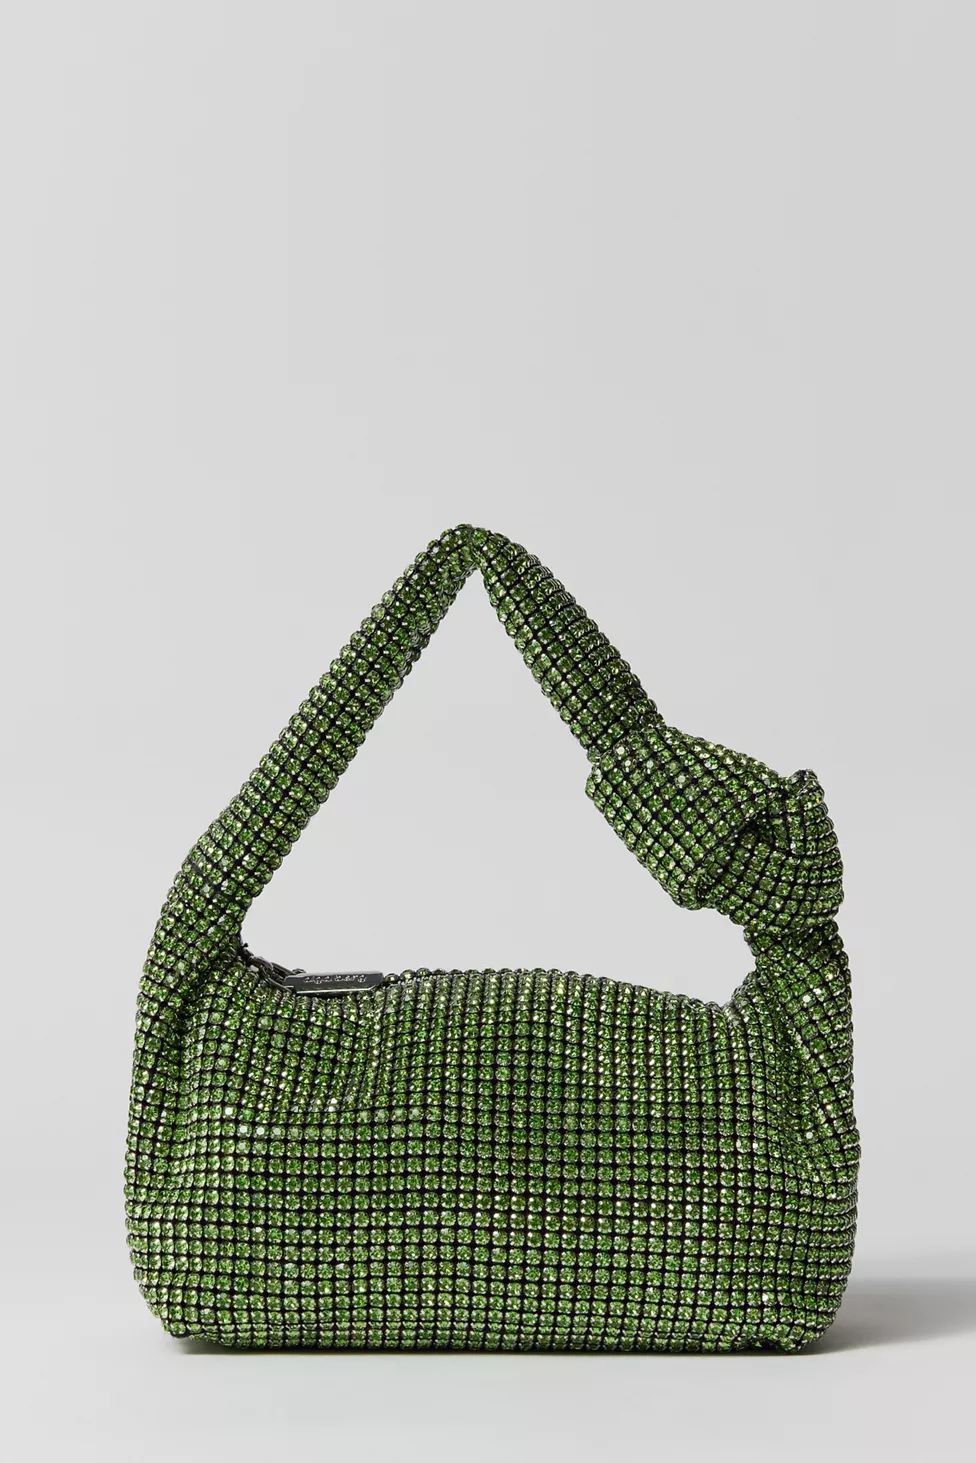 Olga Berg Polly Crystal Shoulder Bag | Urban Outfitters (US and RoW)